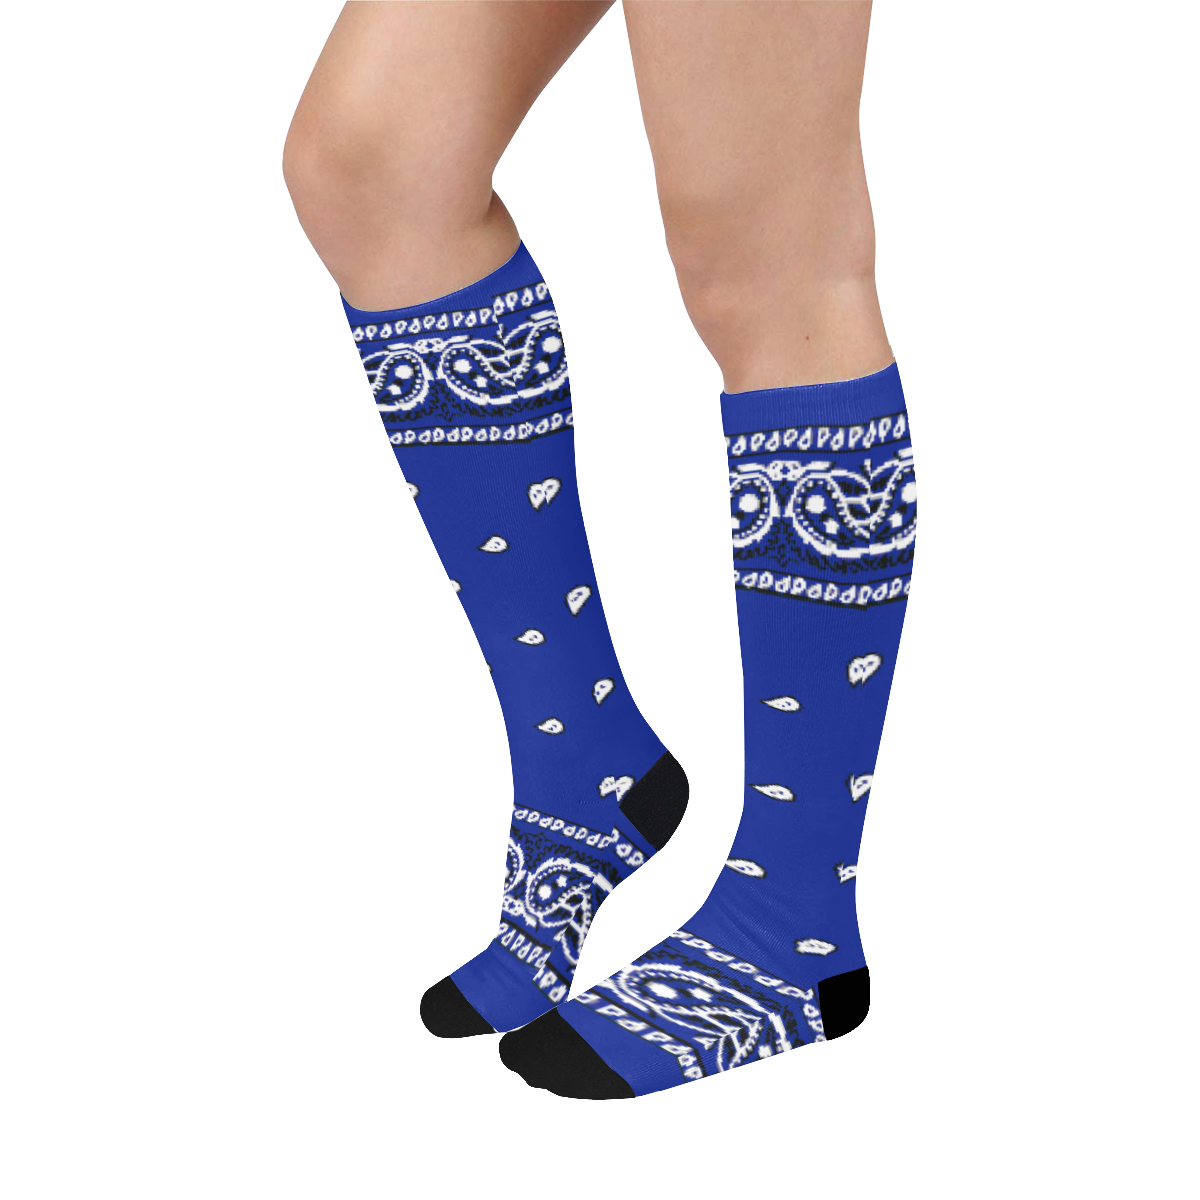 KERCHIEF PATTERN BLUE Over-The-Calf Socks